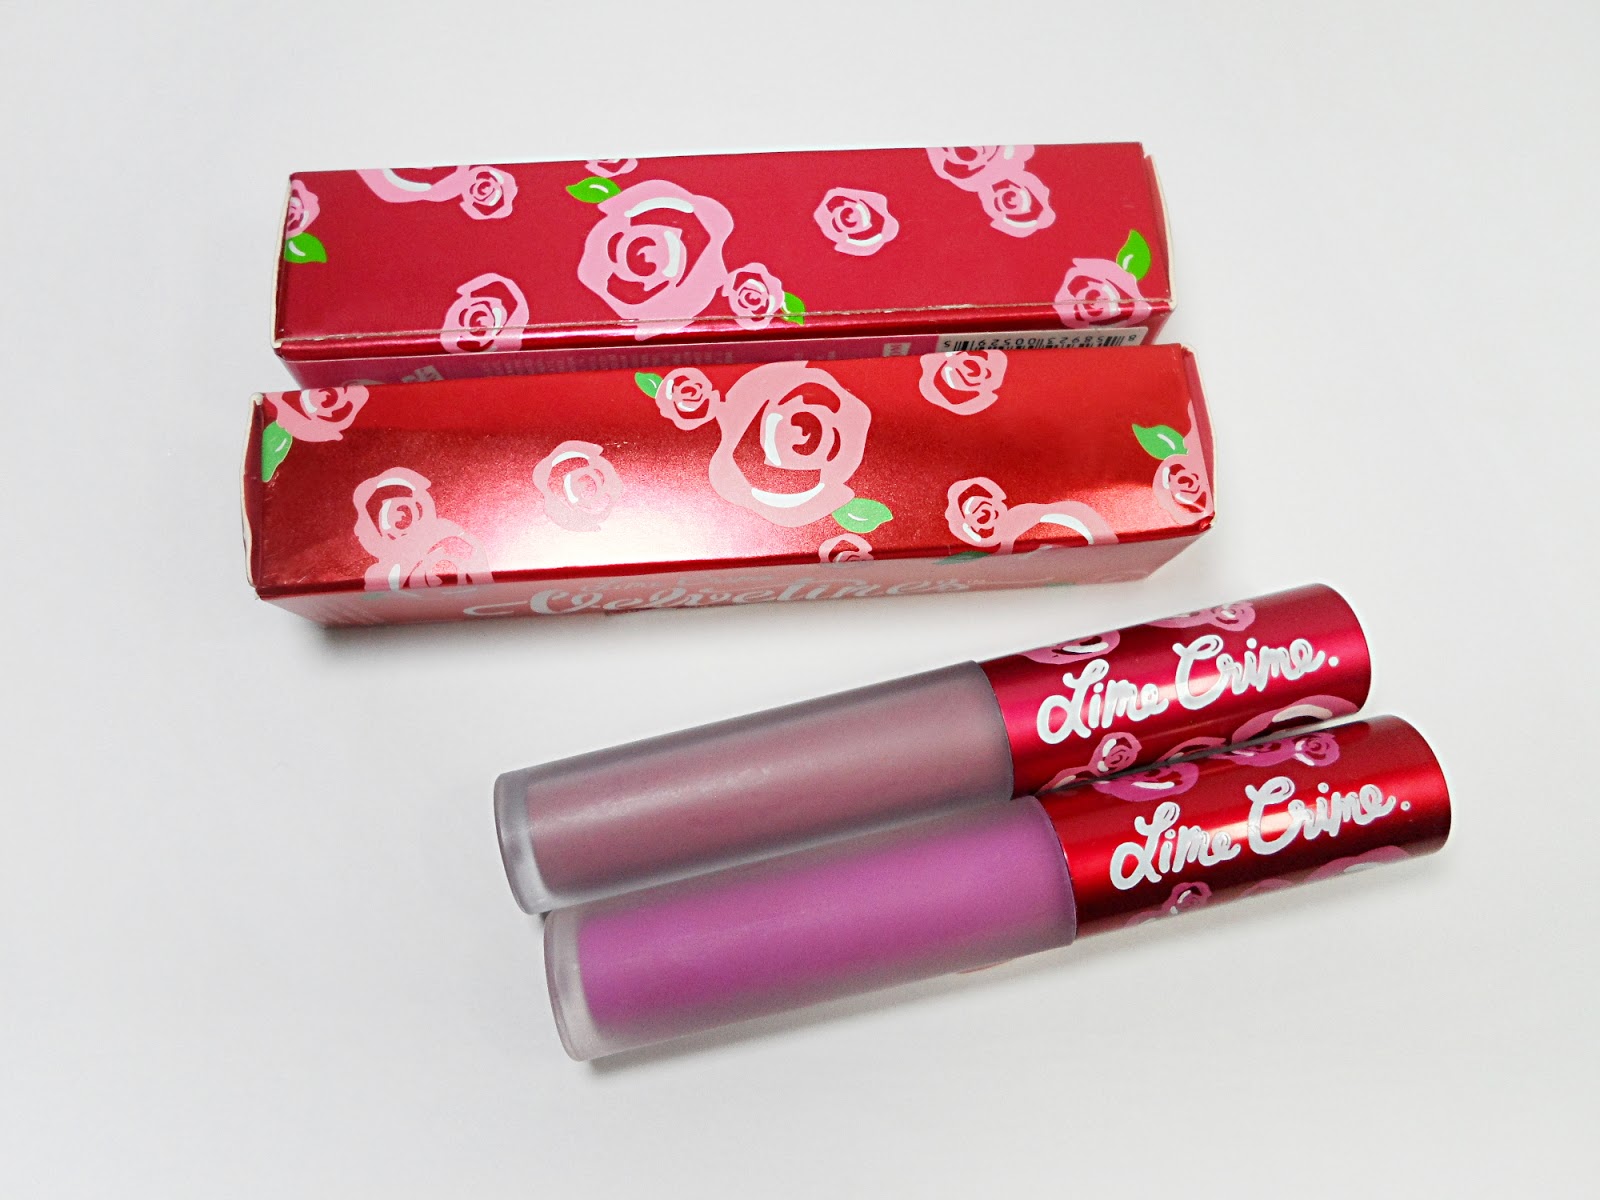 Velvetine lipstick